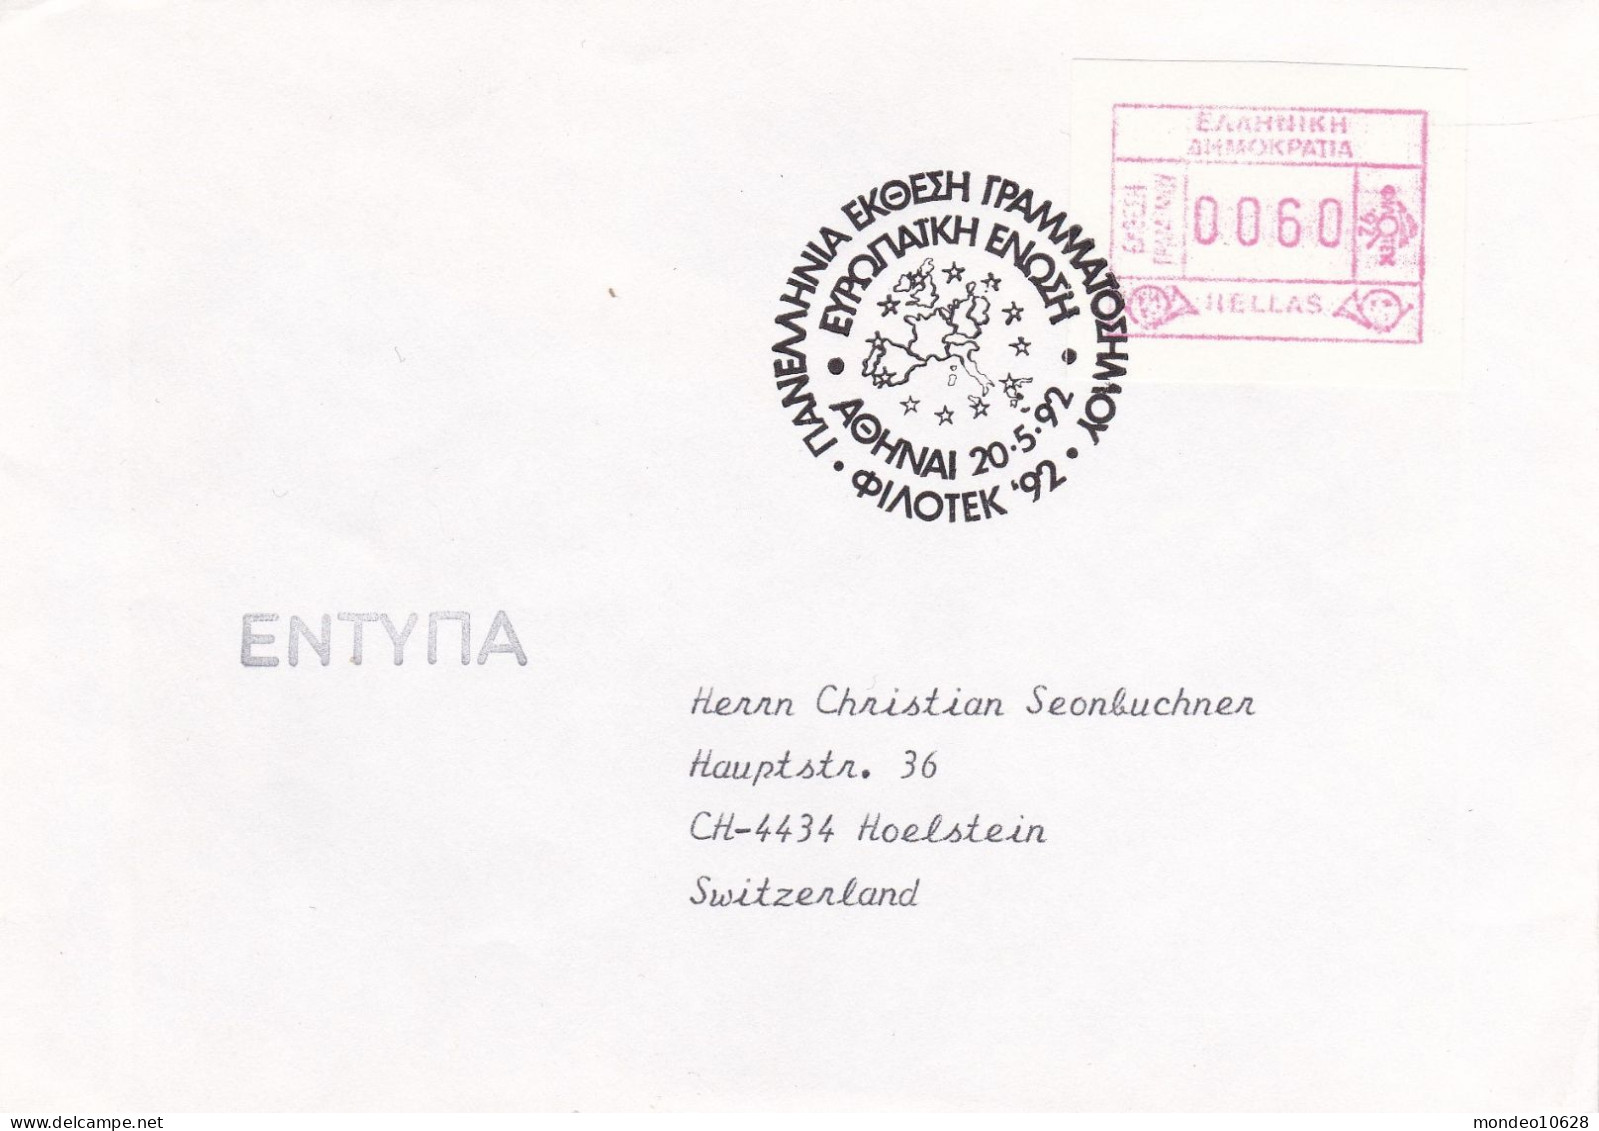 ATM Griechenland, Ausgabe 20.05.92, ETSVST Filotek (142) - Machine Labels [ATM]